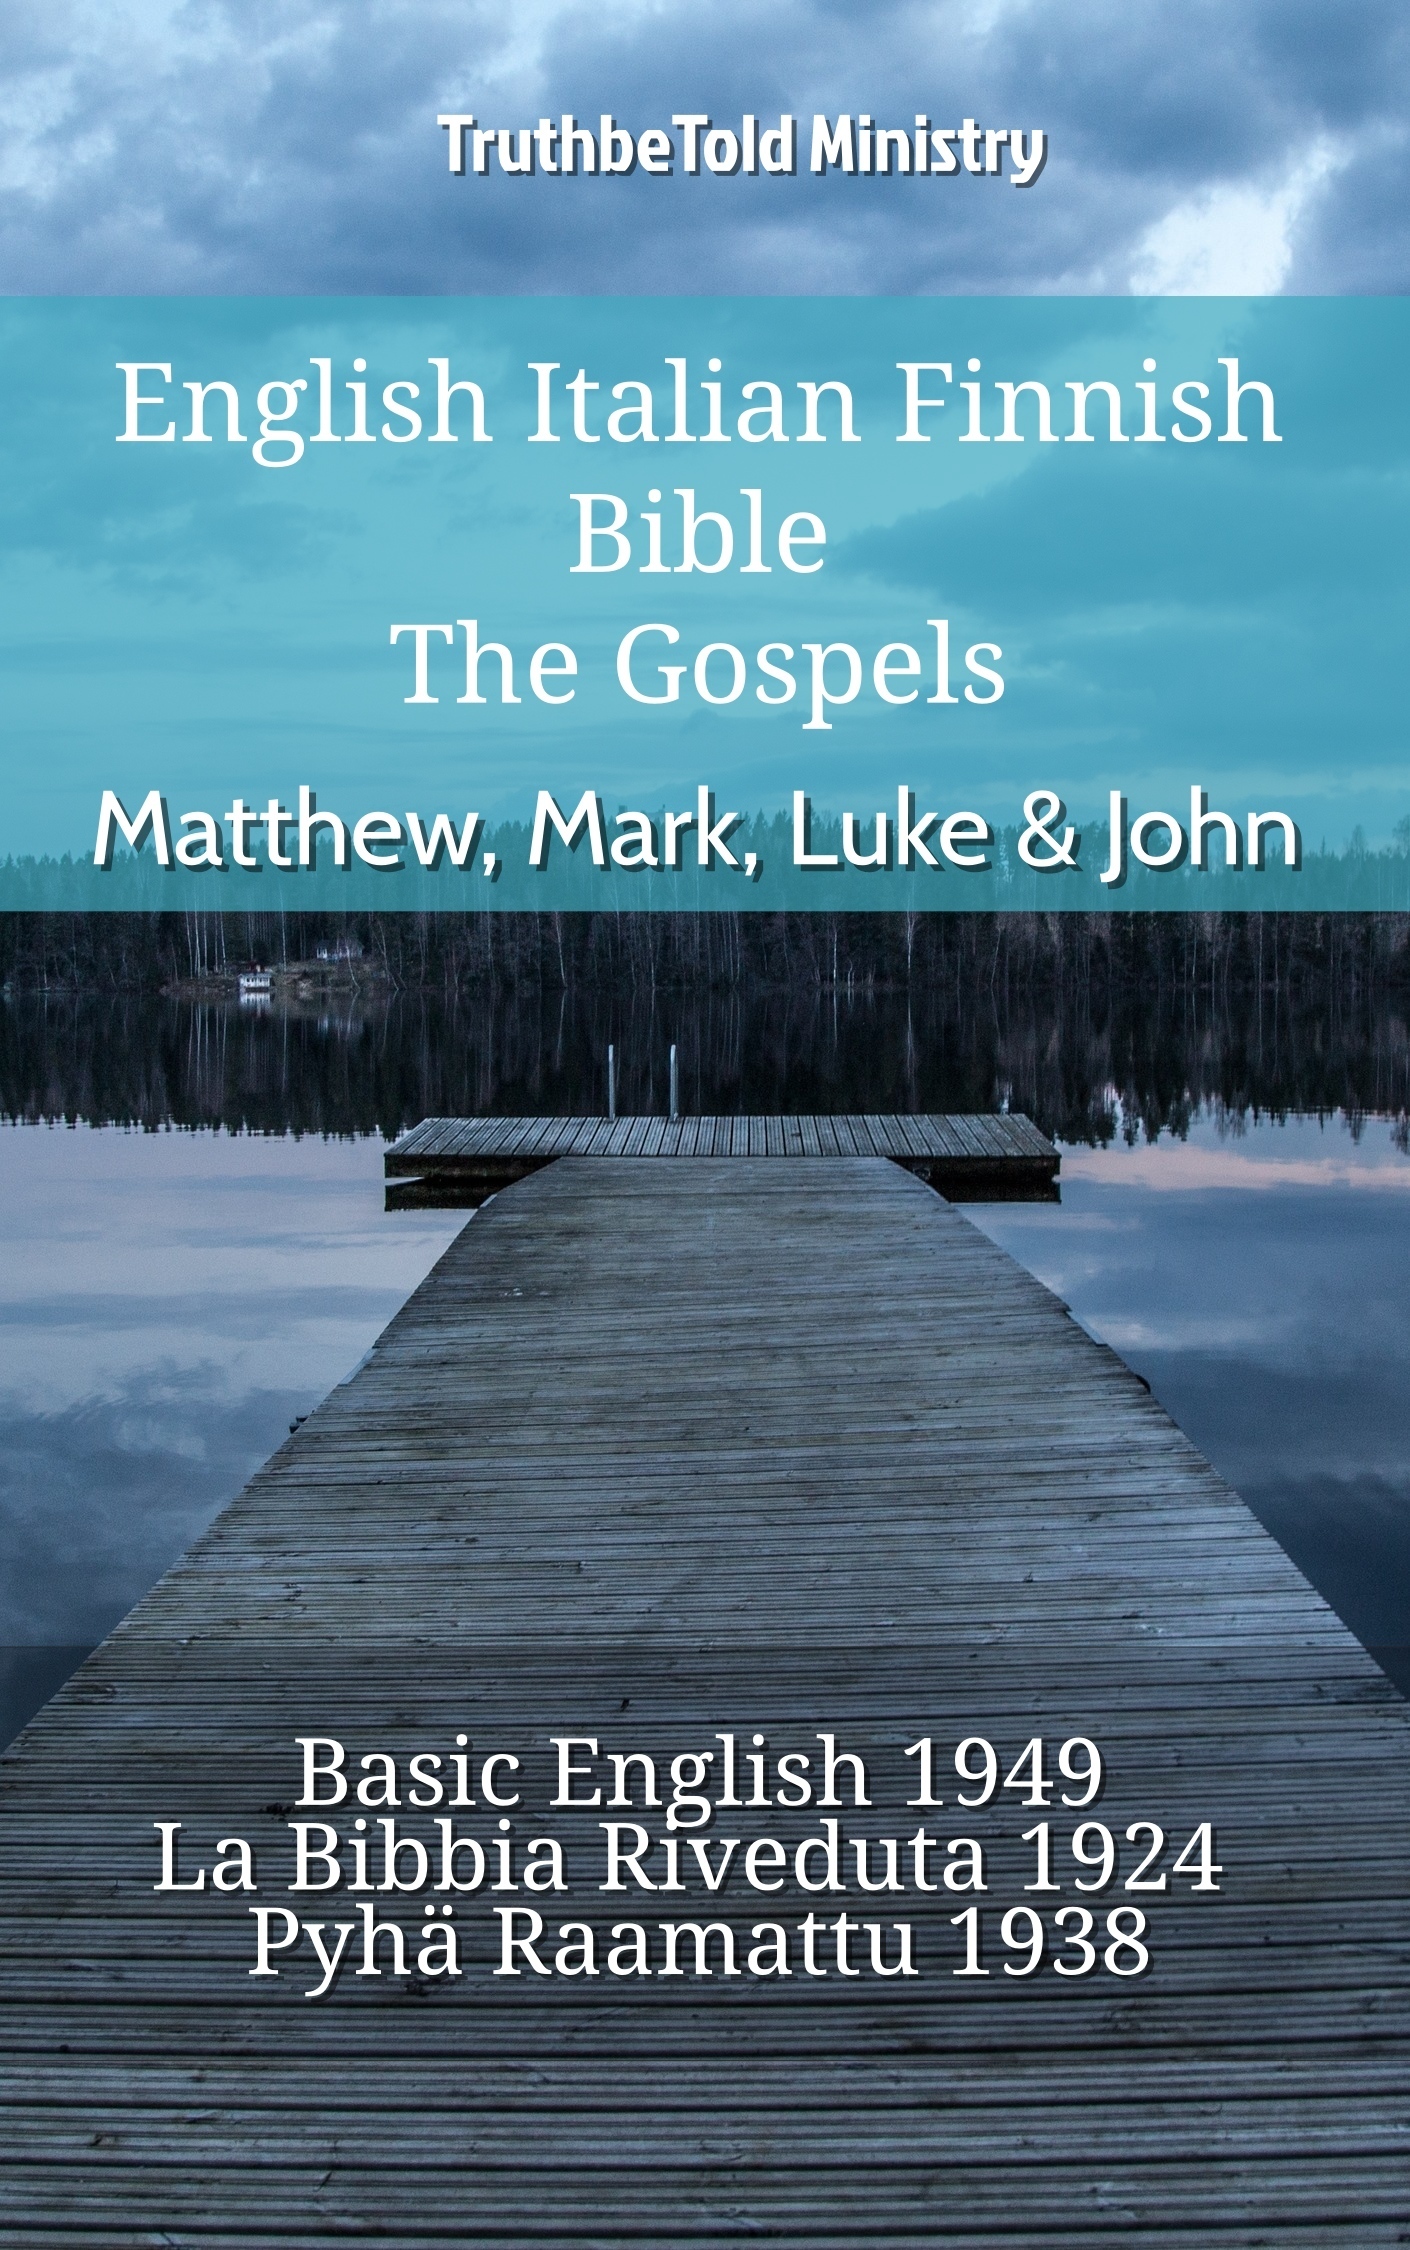 English Italian Finnish Bible - The Gospels - Matthew, Mark, Luke & John